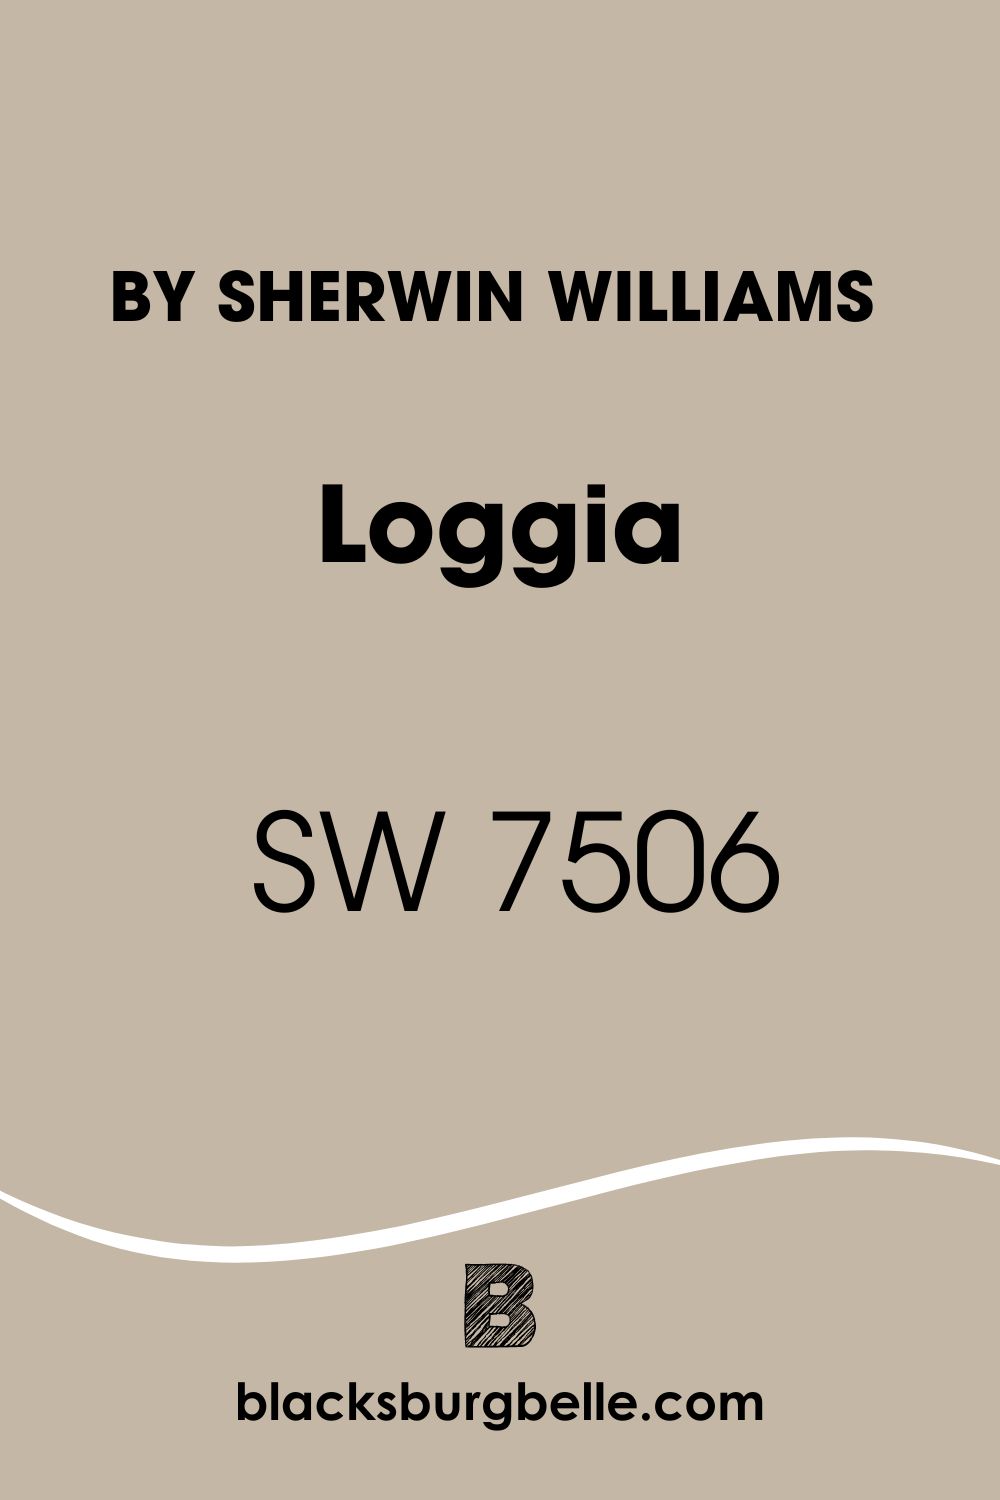 Sherwin Williams Loggia SW 7506 